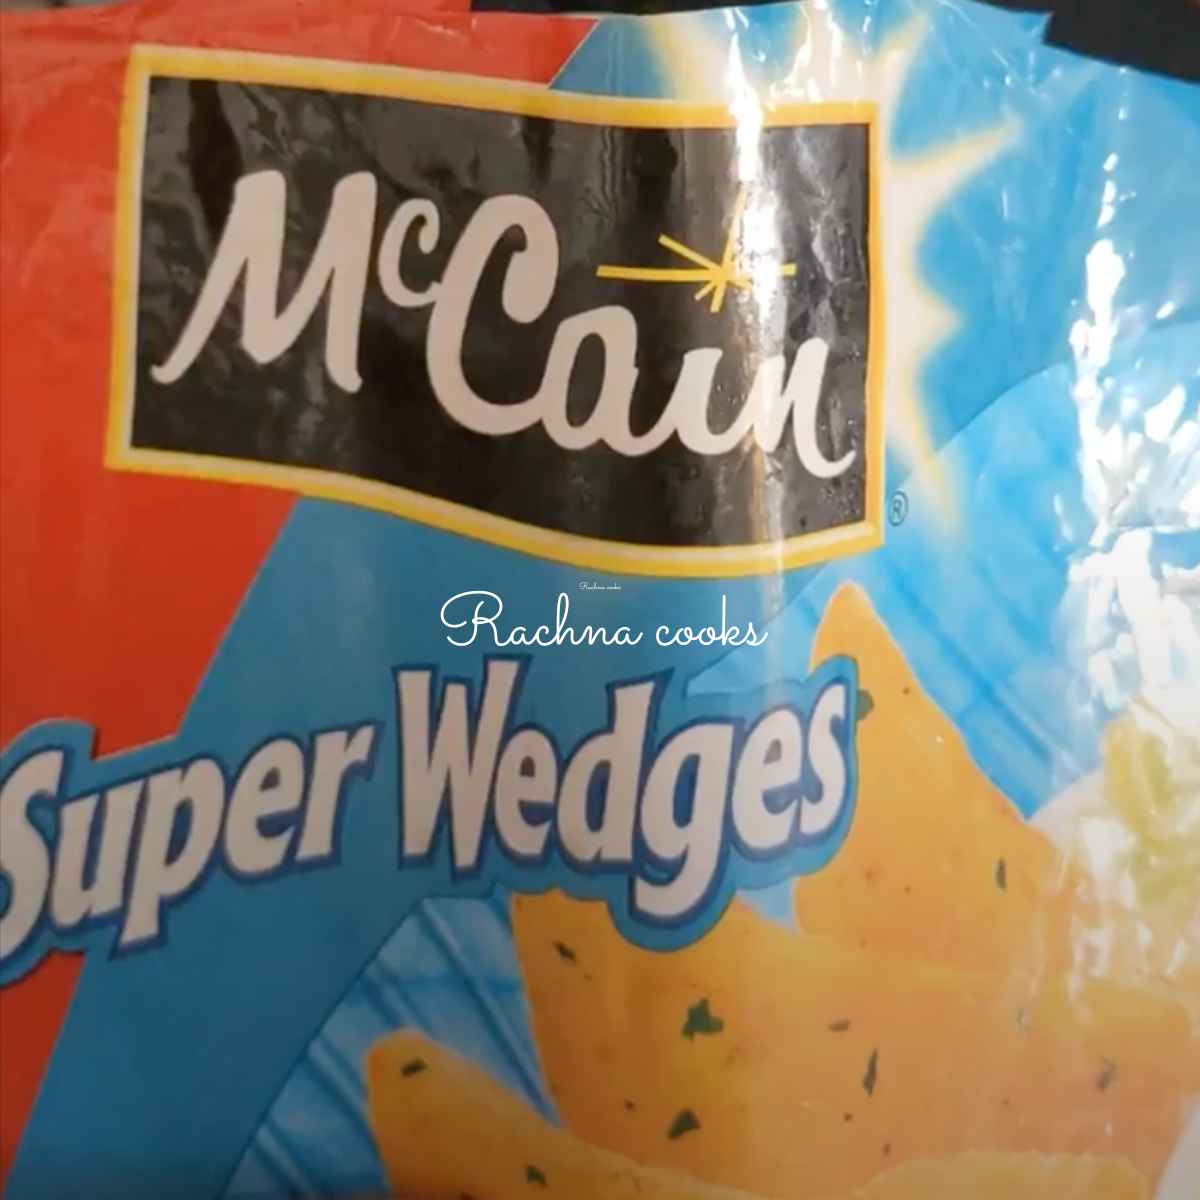 McCain packof frozen potato wedges